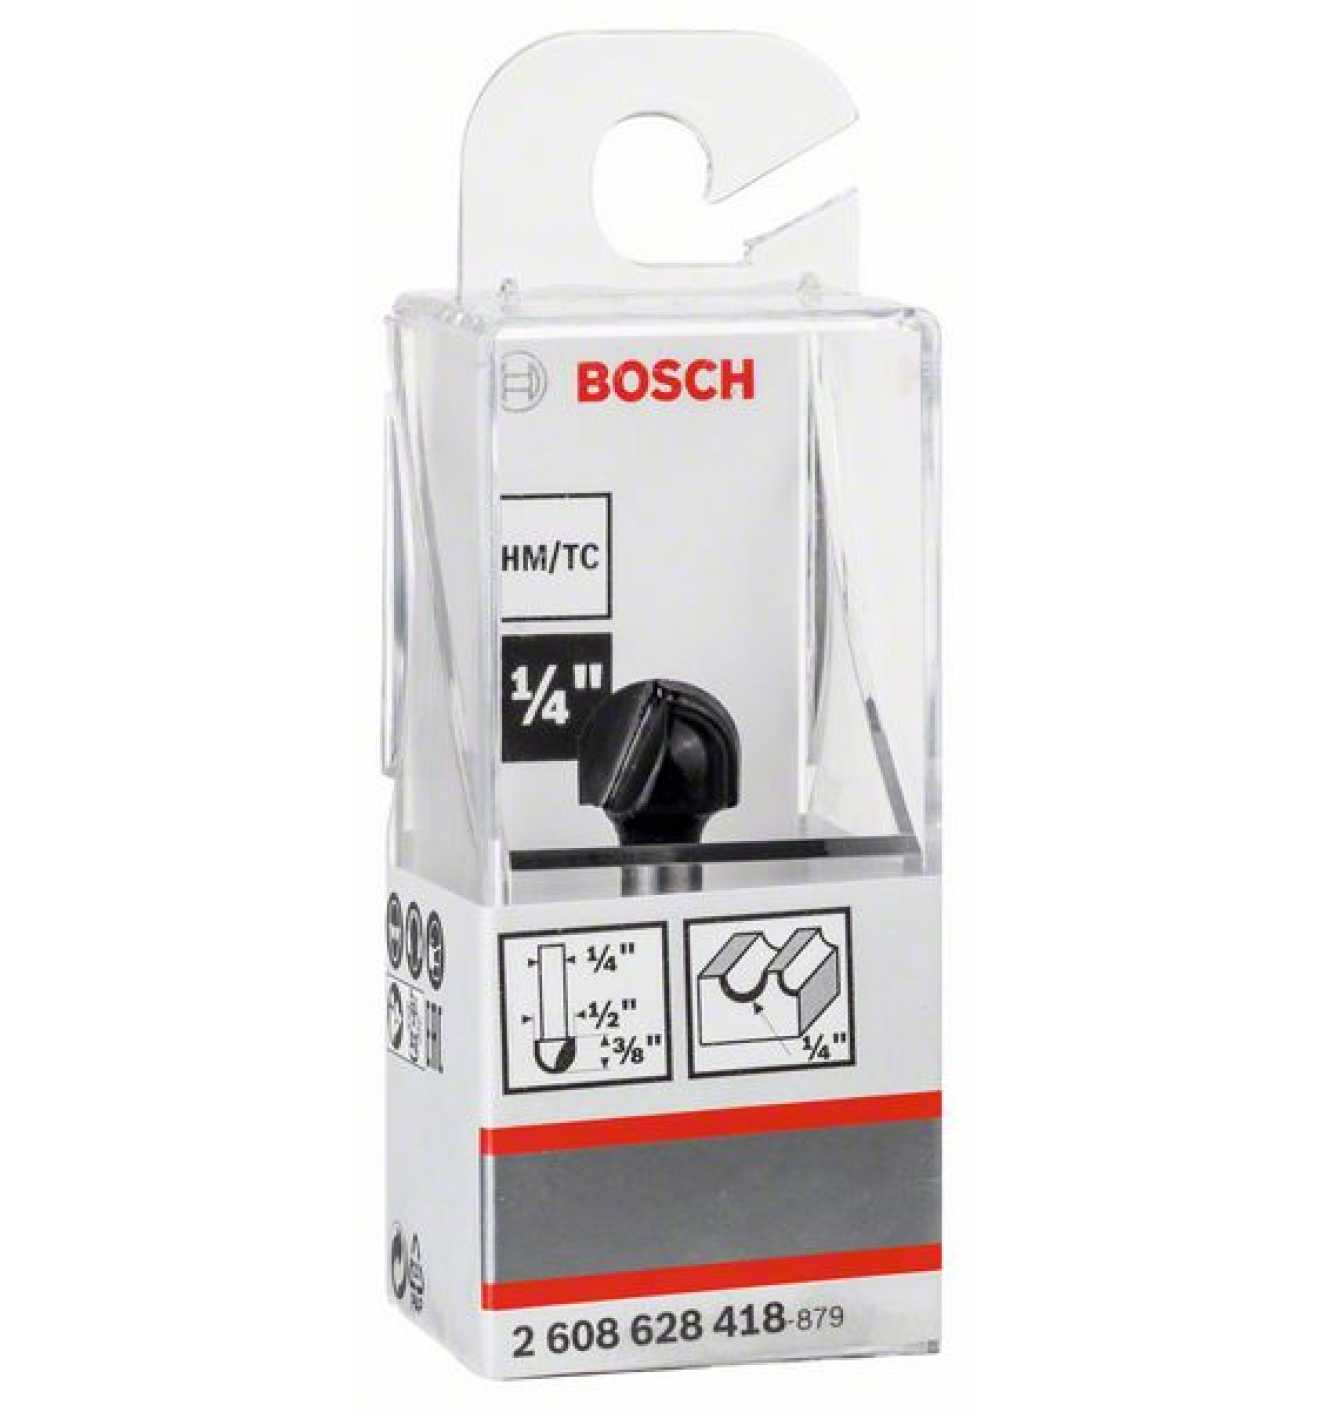 Bosch Core box bit, 1/4", R1 6.3 mm, D 12.7 mm, L 9.2 mm, G 40 mm 2608628418 Power Tool Services